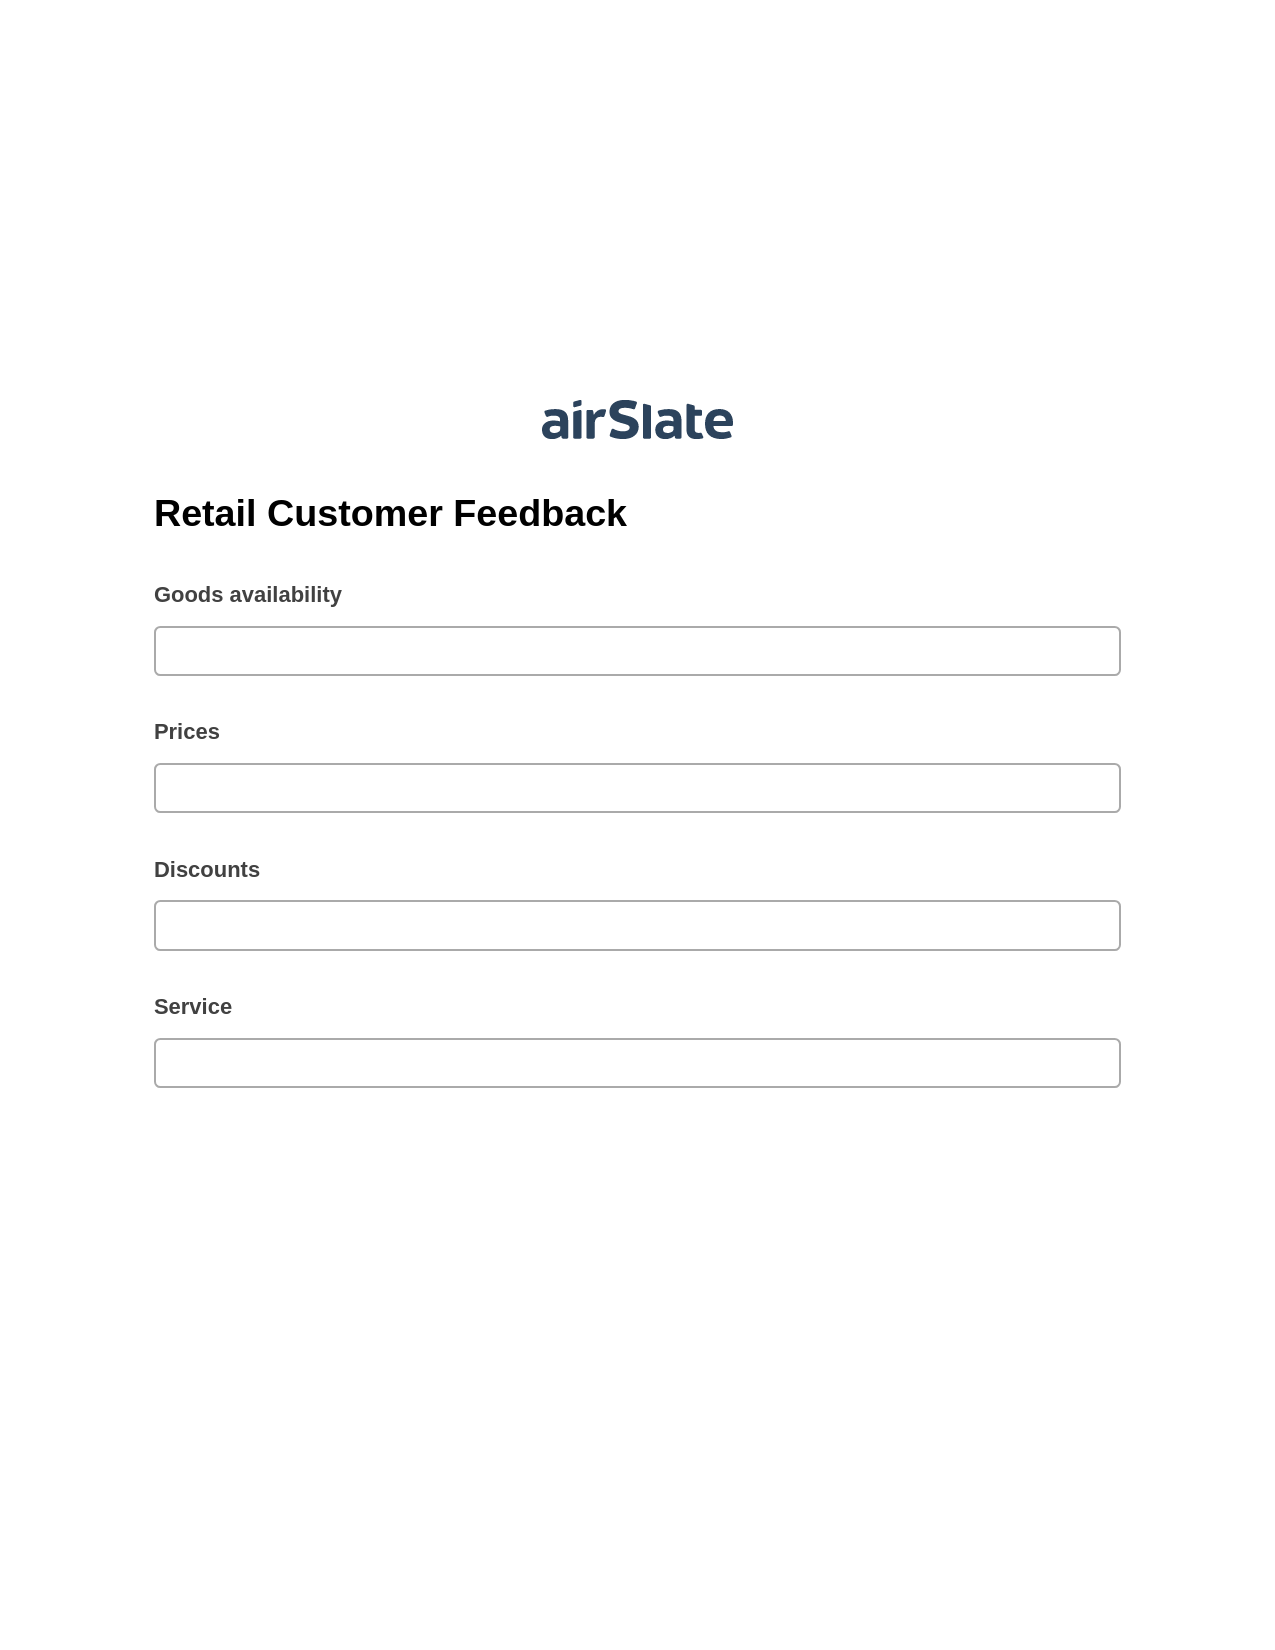 Retail Customer Feedback Pre-fill from Excel Spreadsheet Bot, SendGrid send Campaign bot, Slack Notification Postfinish Bot